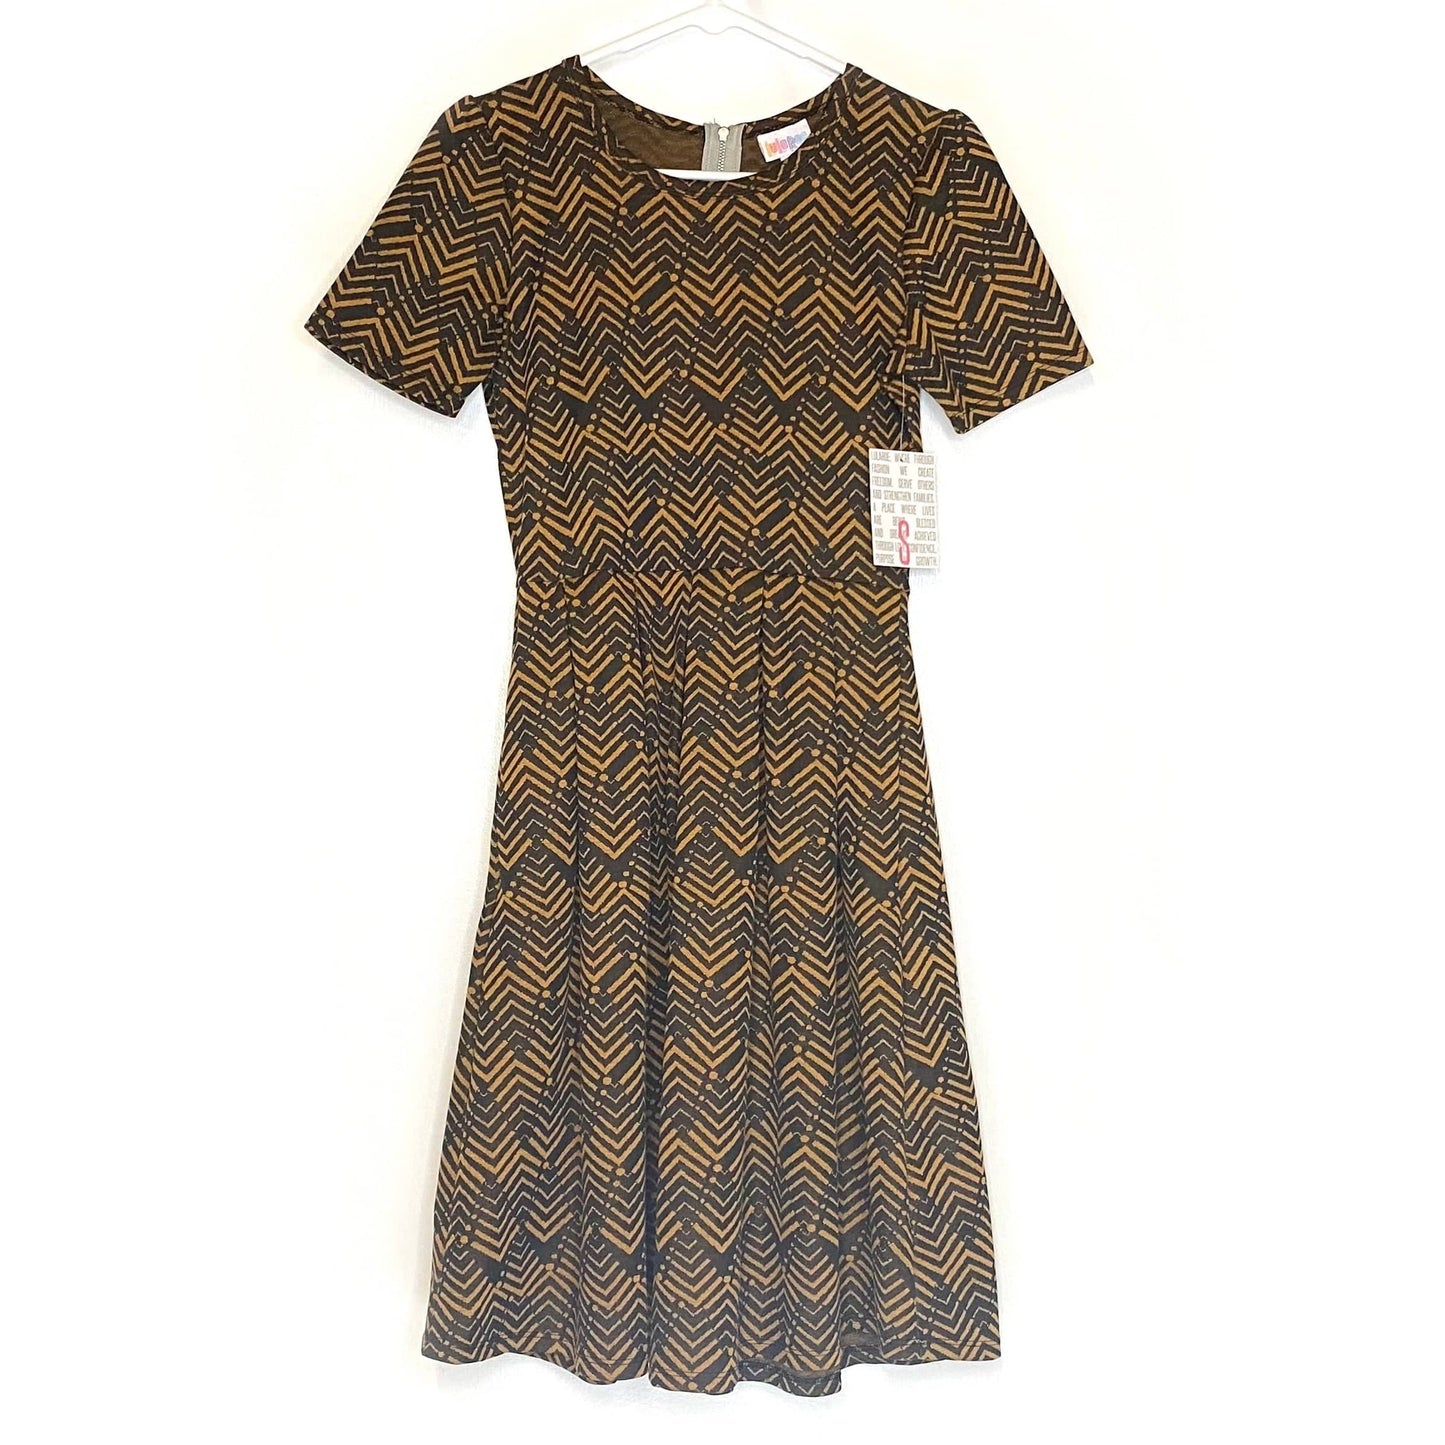 LuLaRoe Womens S Amelia Brown/Orange Chevron Pattern Dress S/s NWT